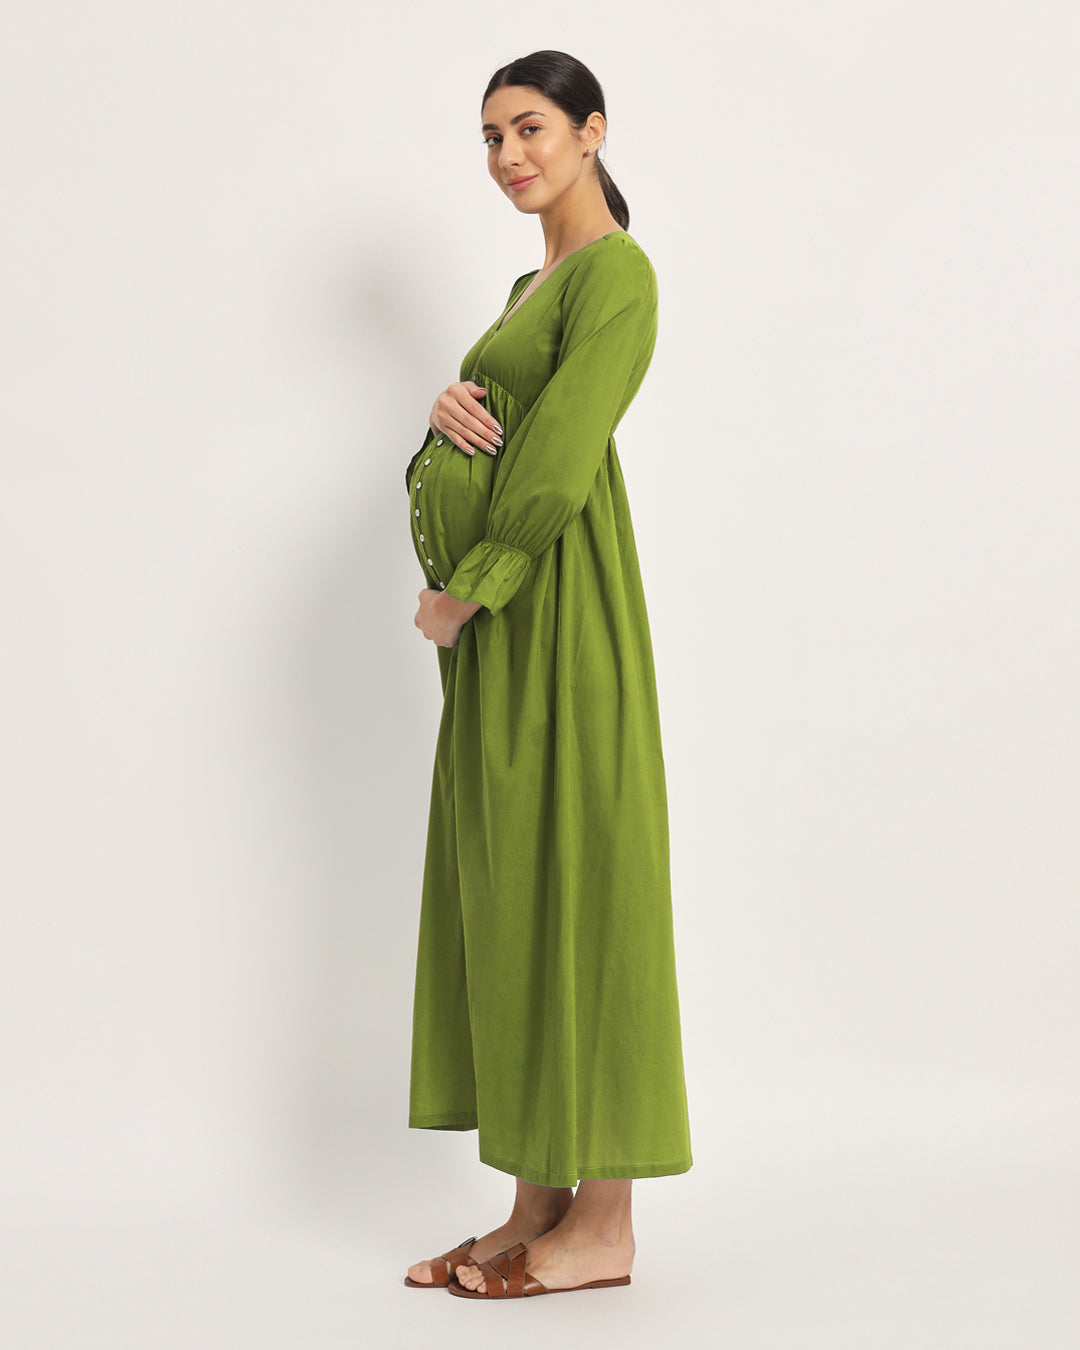 Combo: Black & Sage Green Glowing Bellies Maternity & Nursing Dress